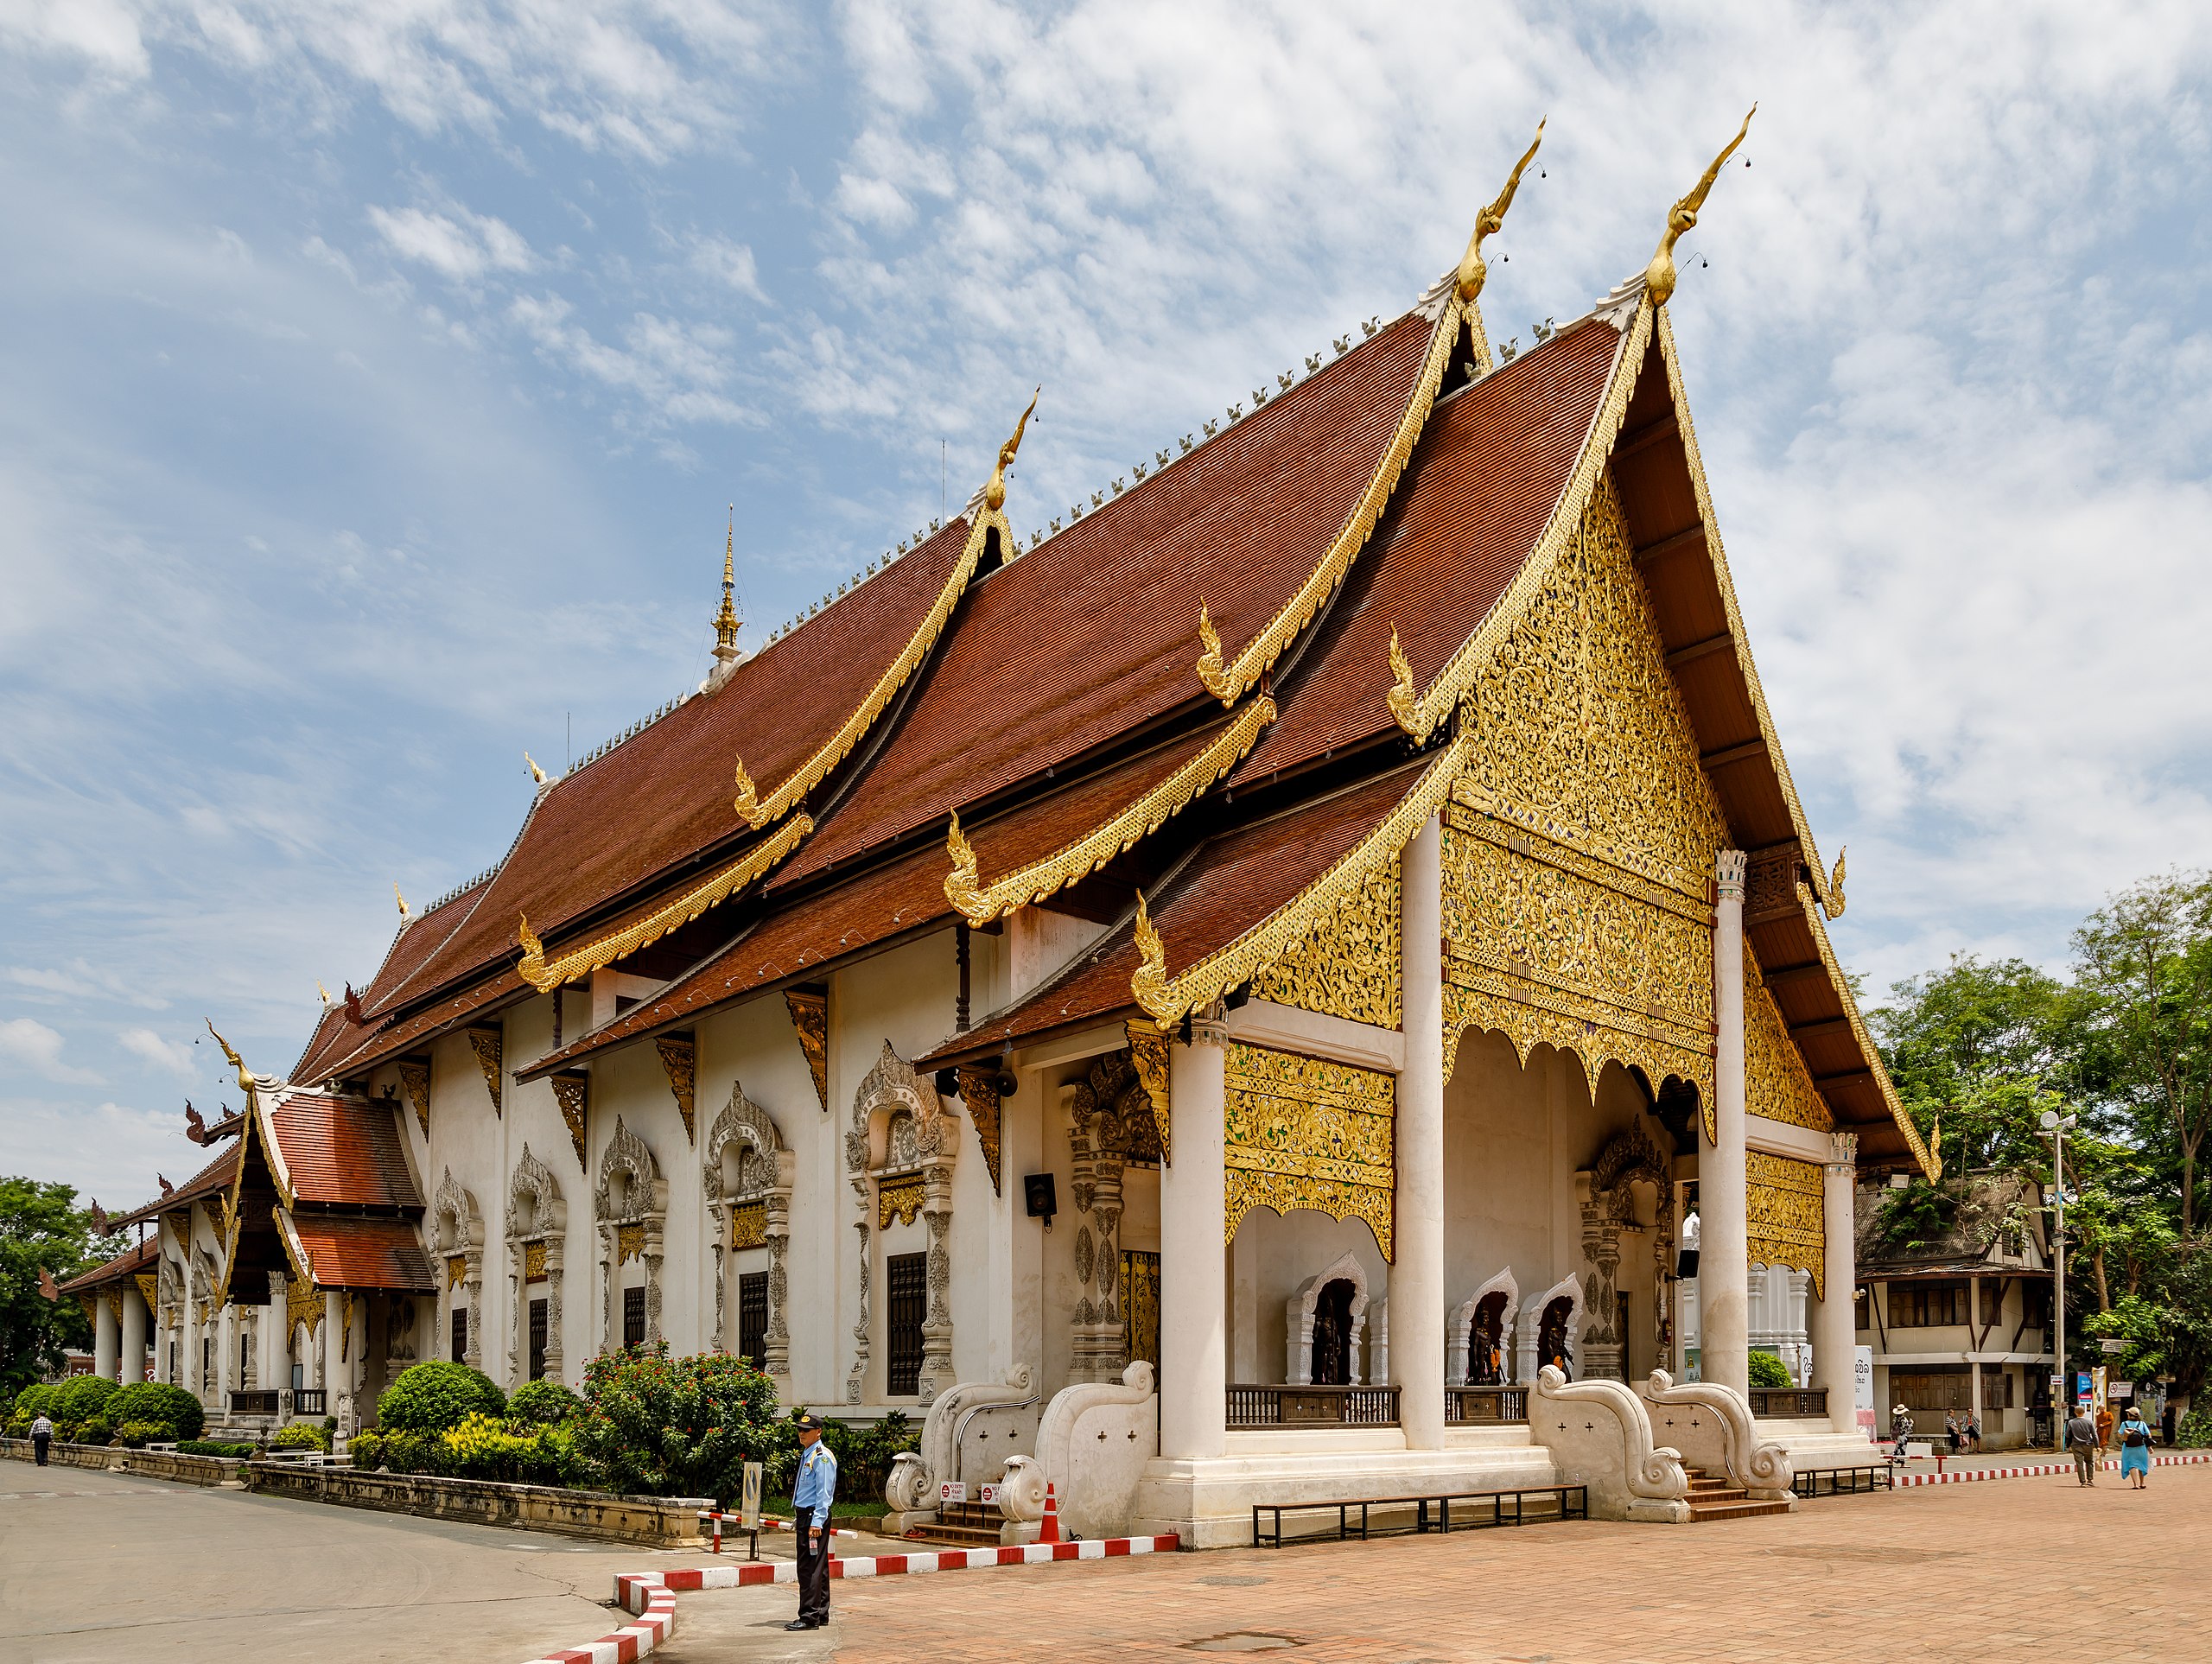 2560px-Chiang-Mai_Thailand_Wat-Chedi-Luang-01.jpg